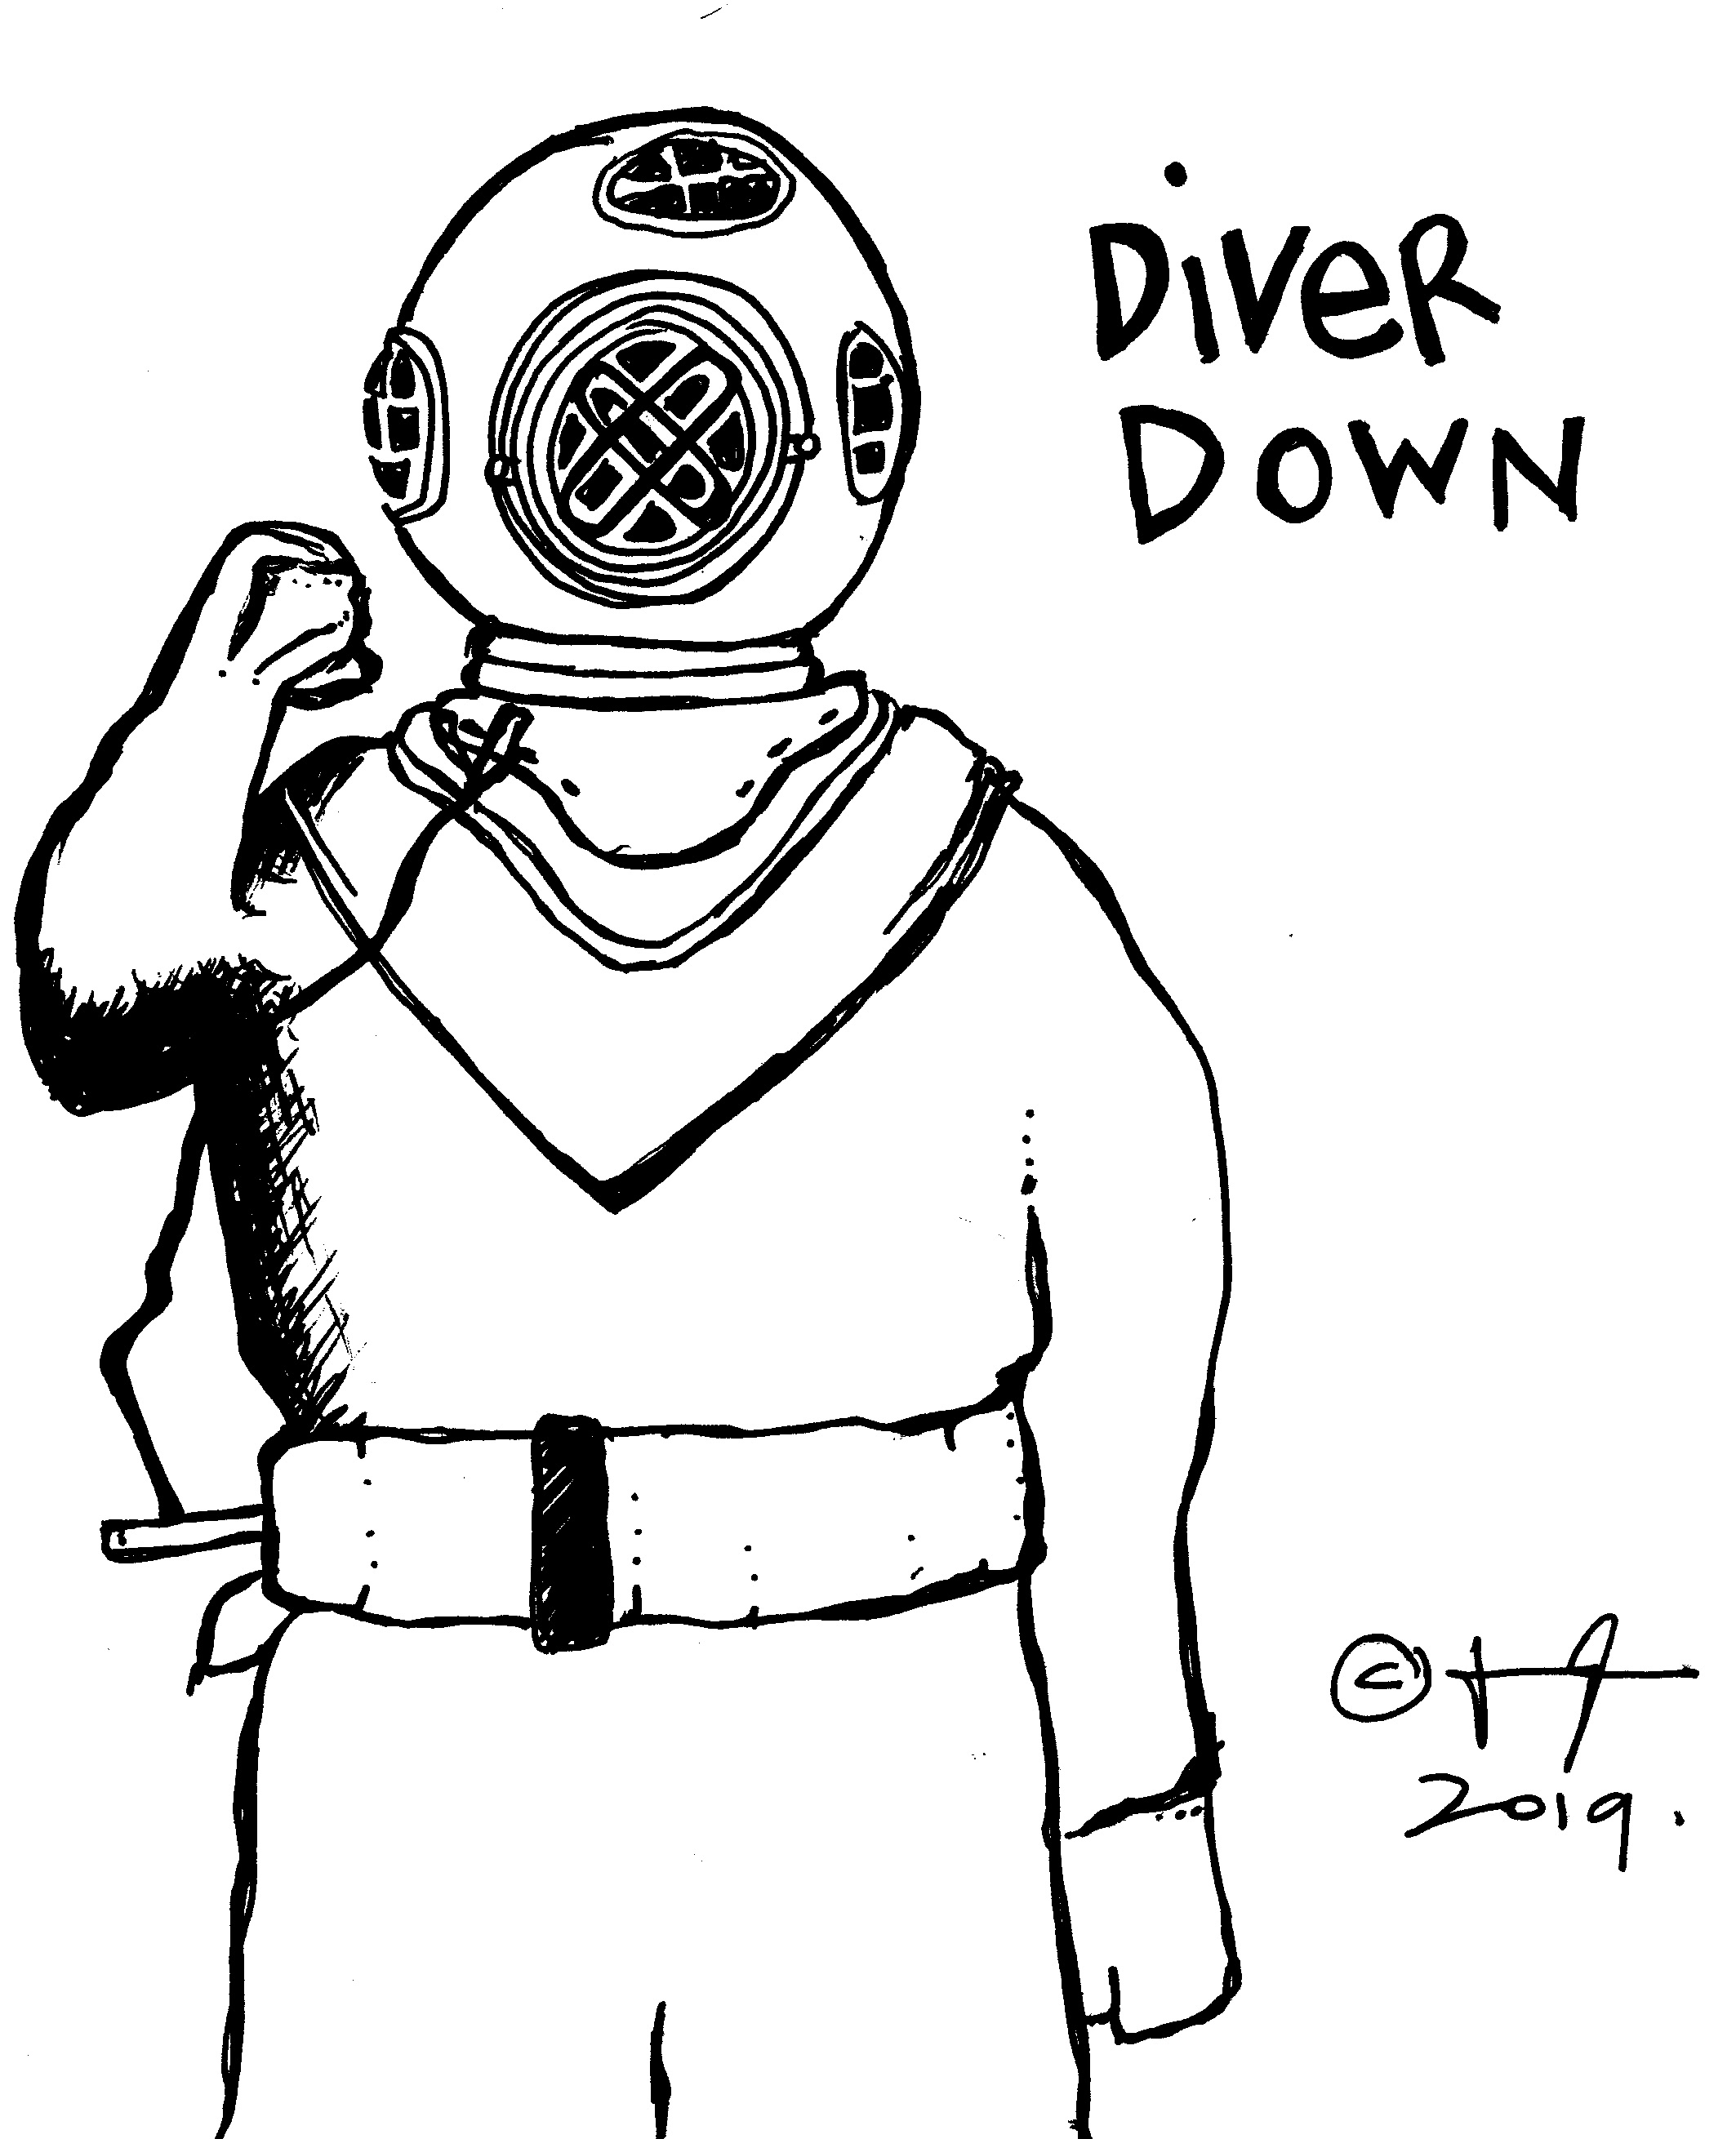 Diver Down